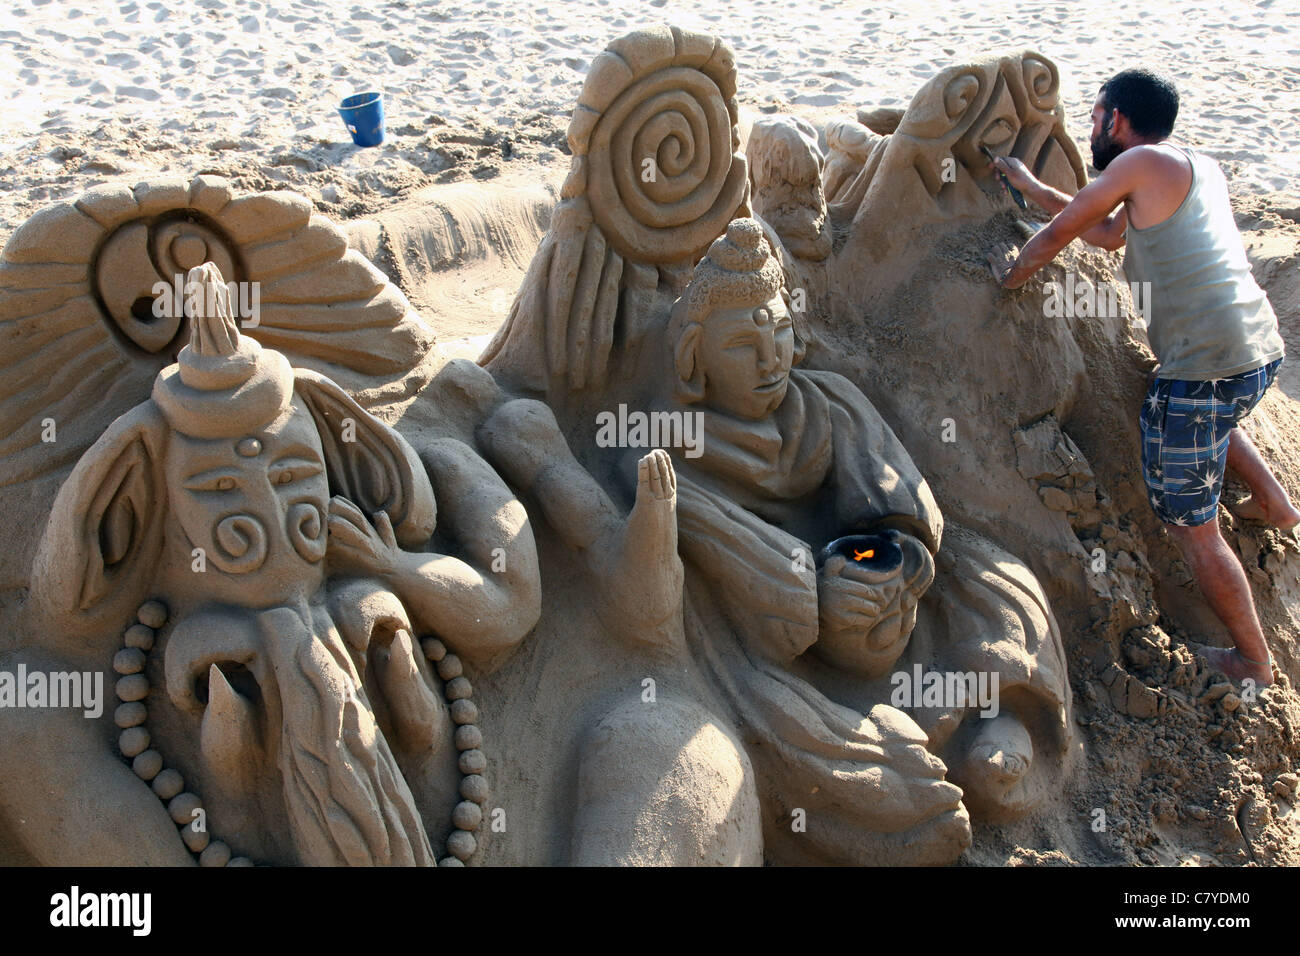 Sand sculpture, Spain, Sitges Stock Photo - Alamy